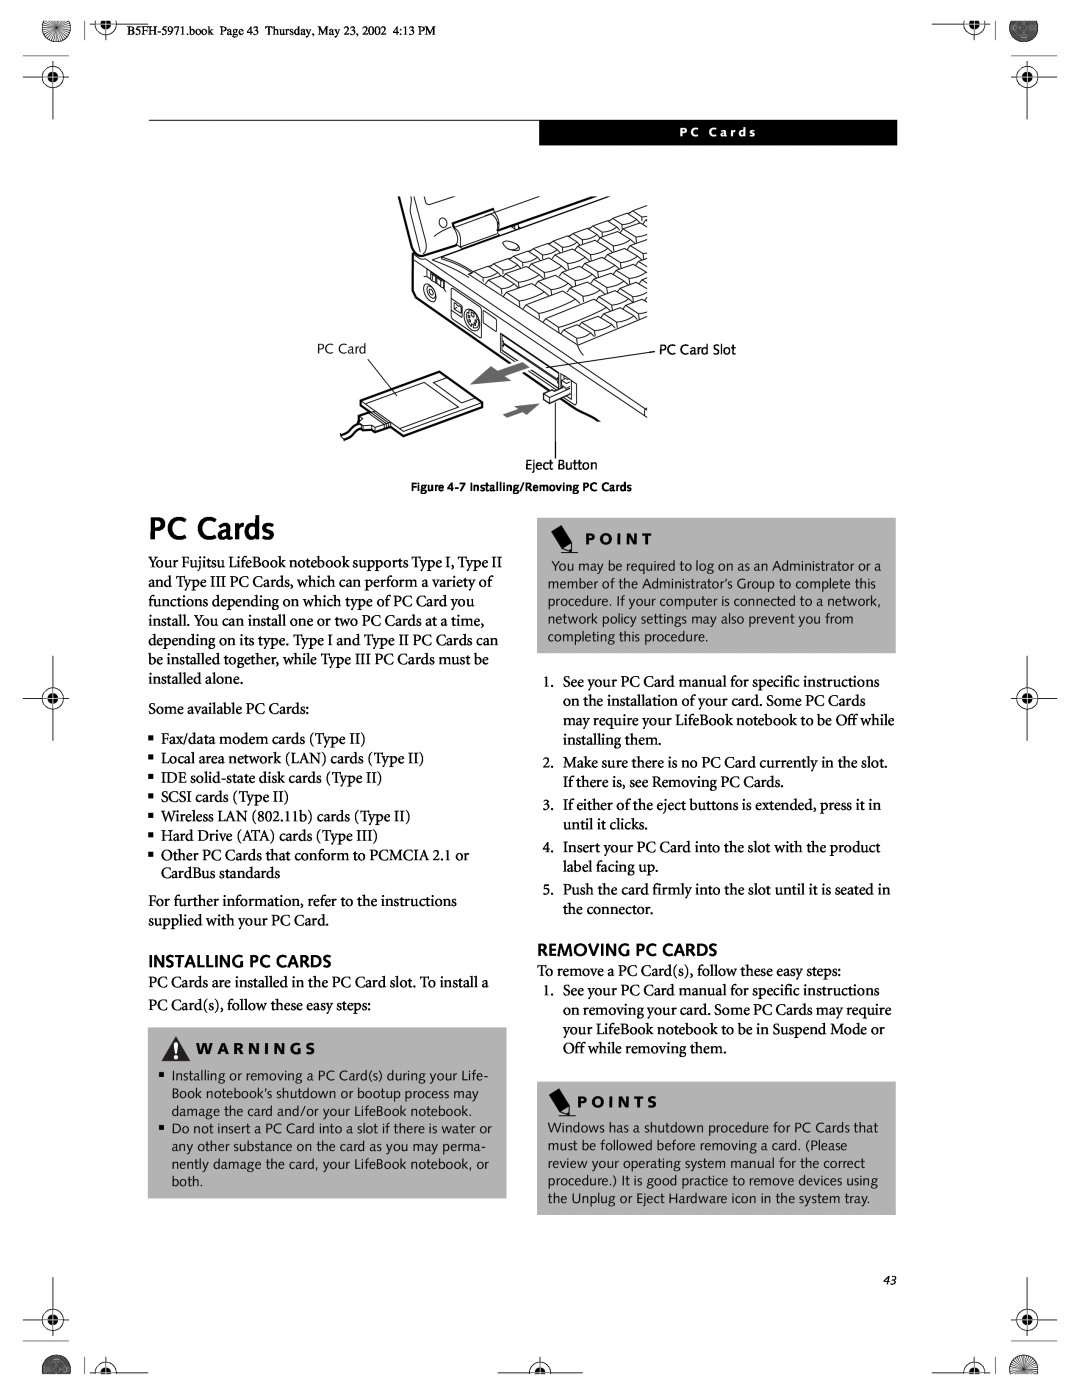 Fujitsu C2010, C2111 manual PC Cards, Installing Pc Cards, Removing Pc Cards, W A R N I N G S, P O I N T S 